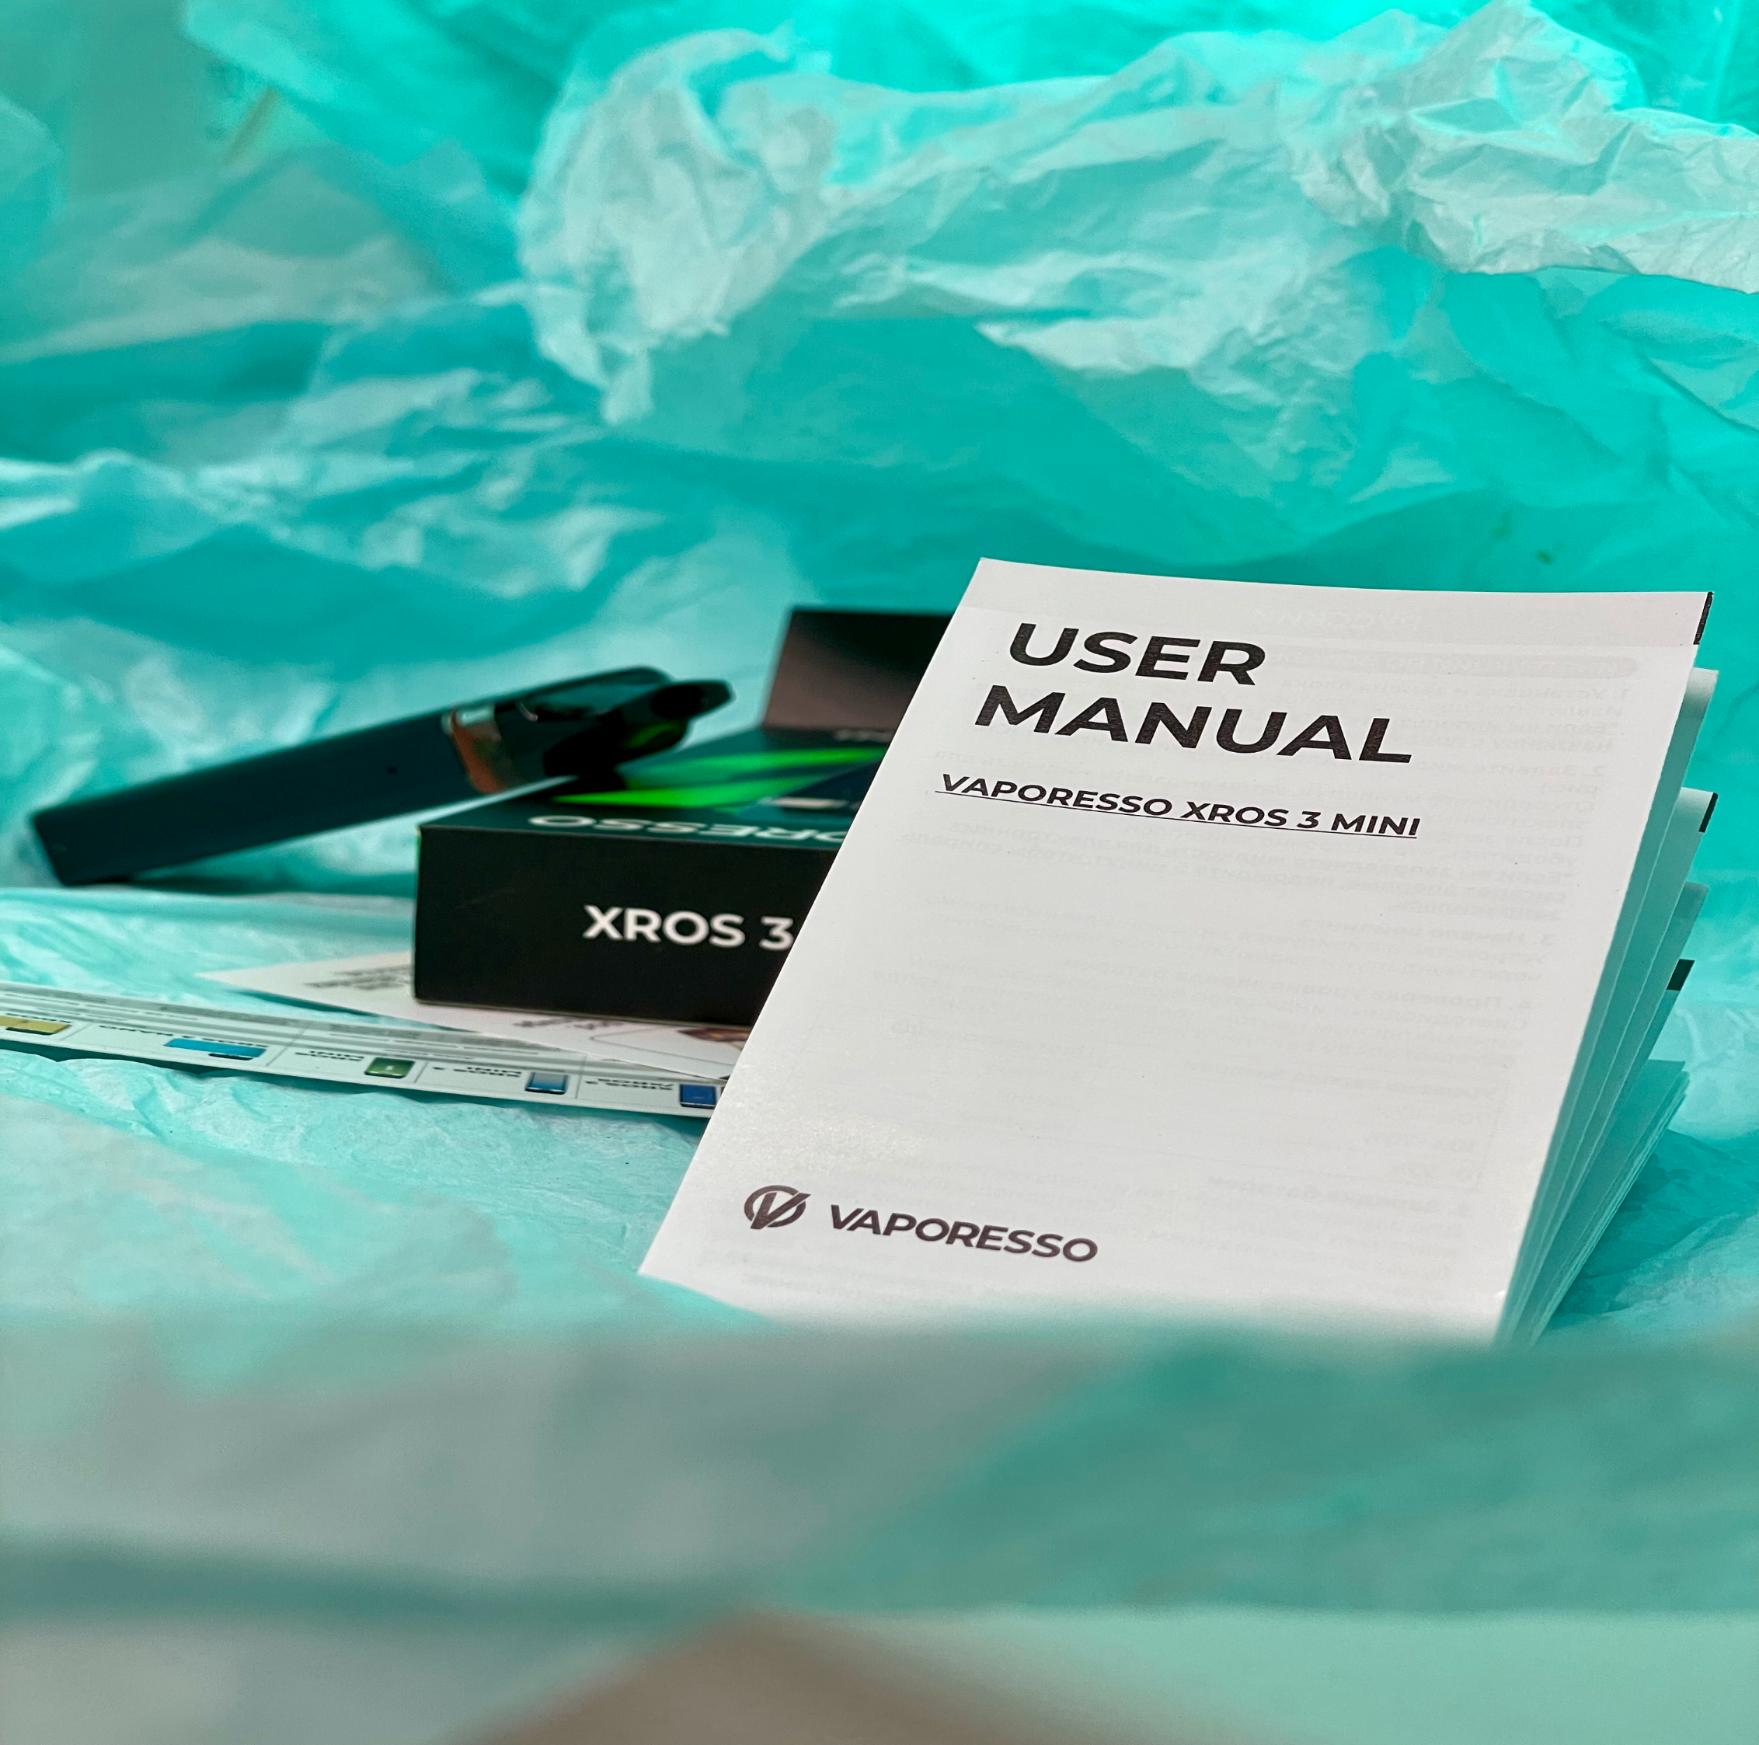 User Manual Xros 3 mini